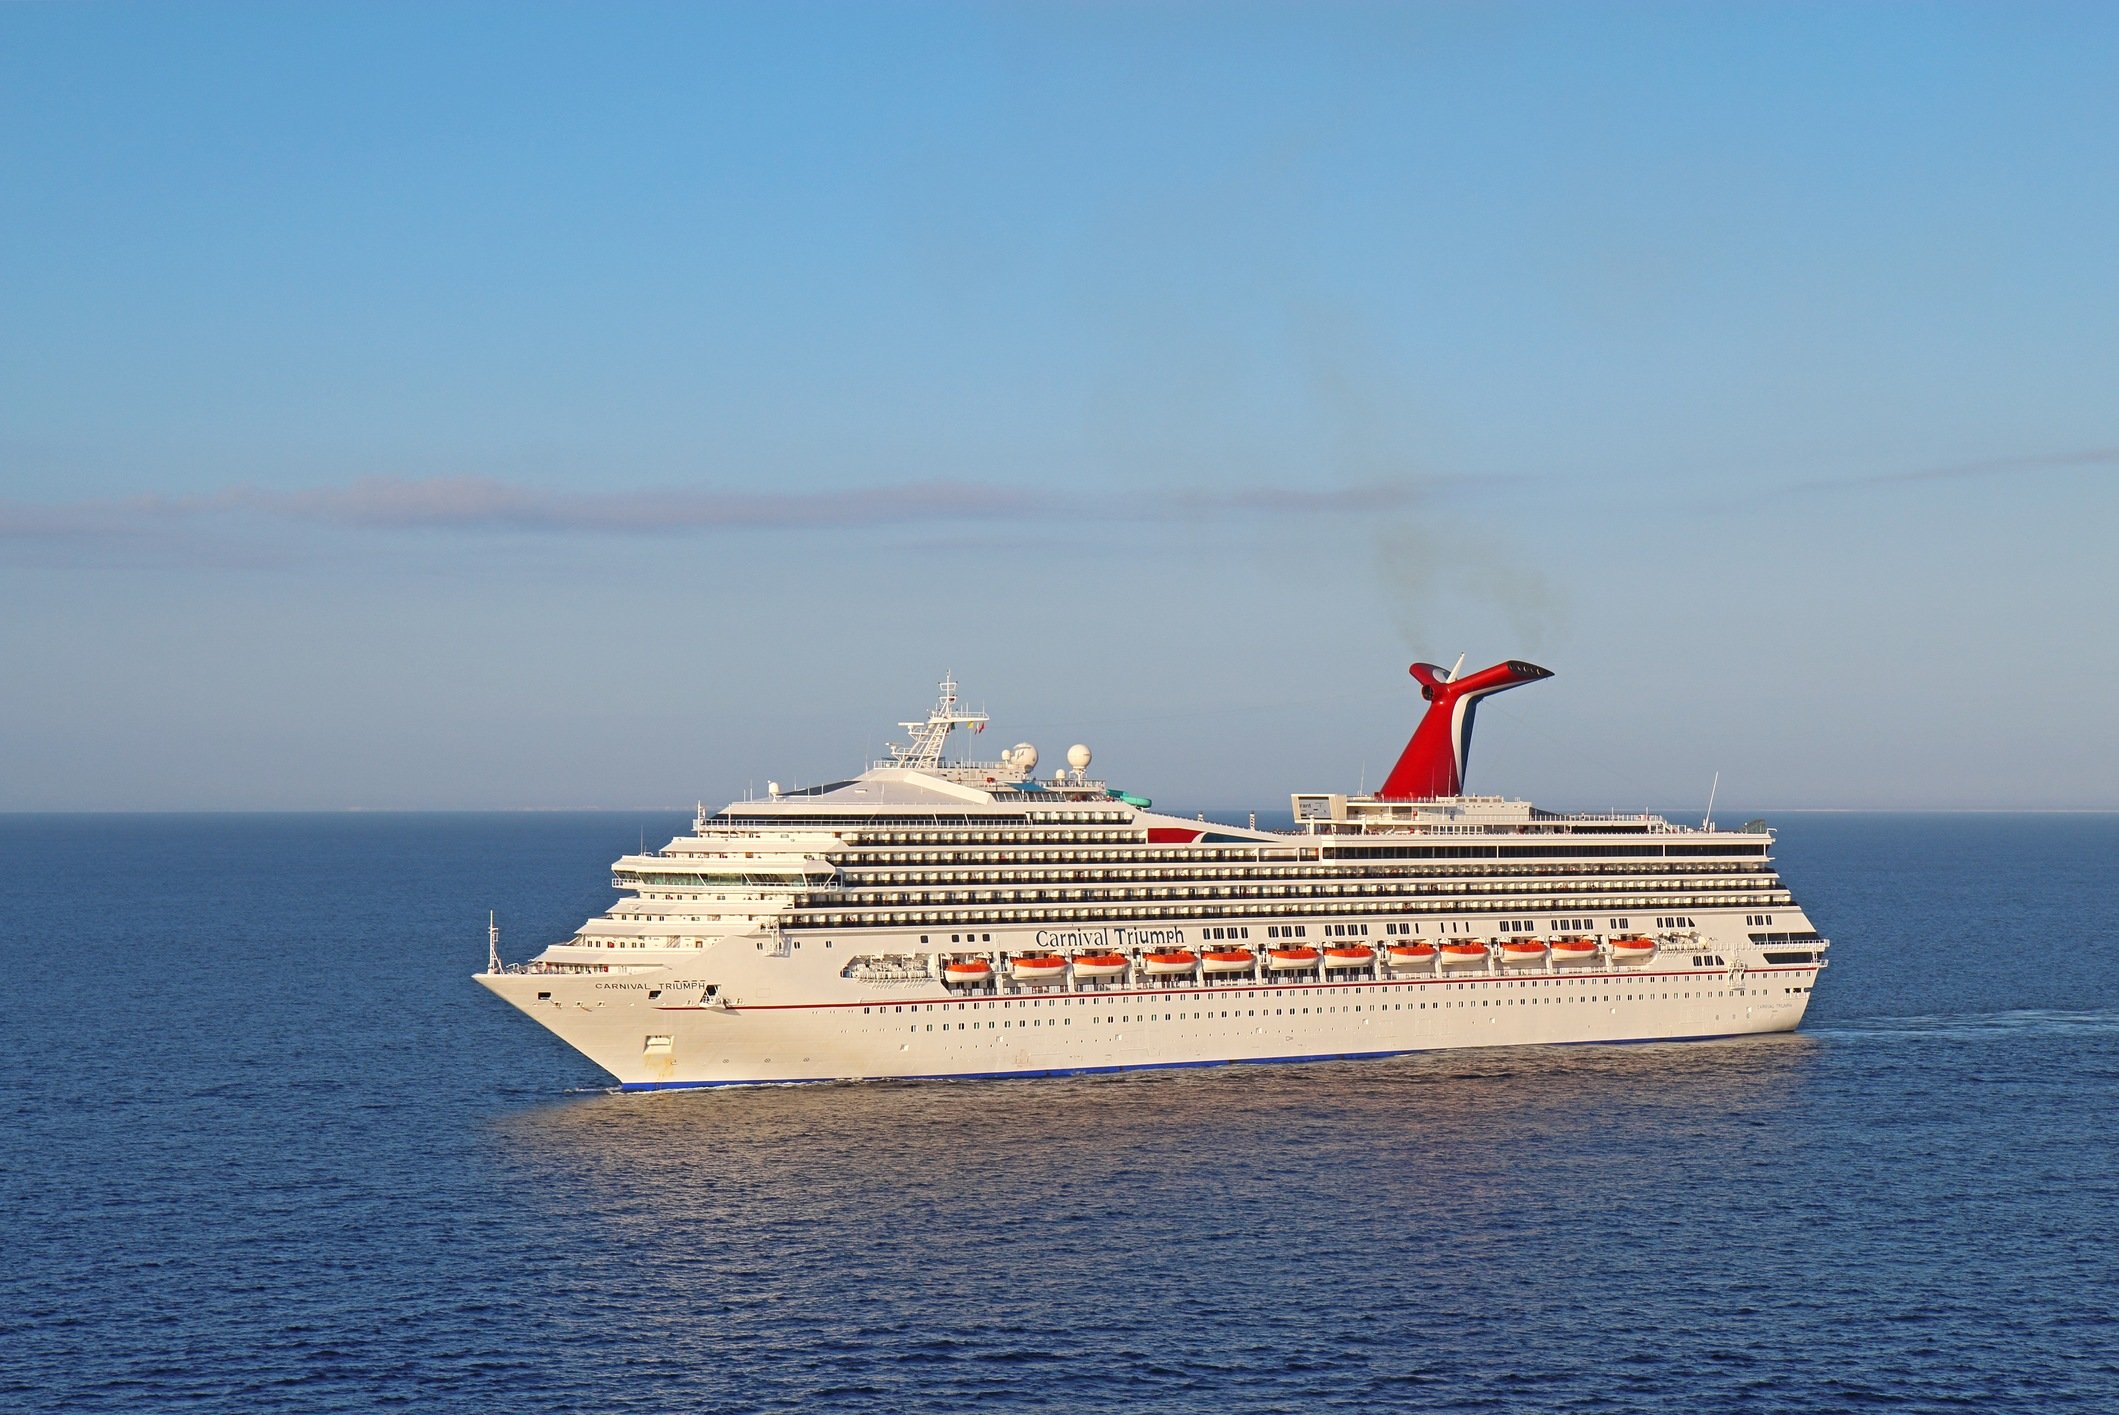 Cruise ship Carnival Triumph on the Caribbean Sea